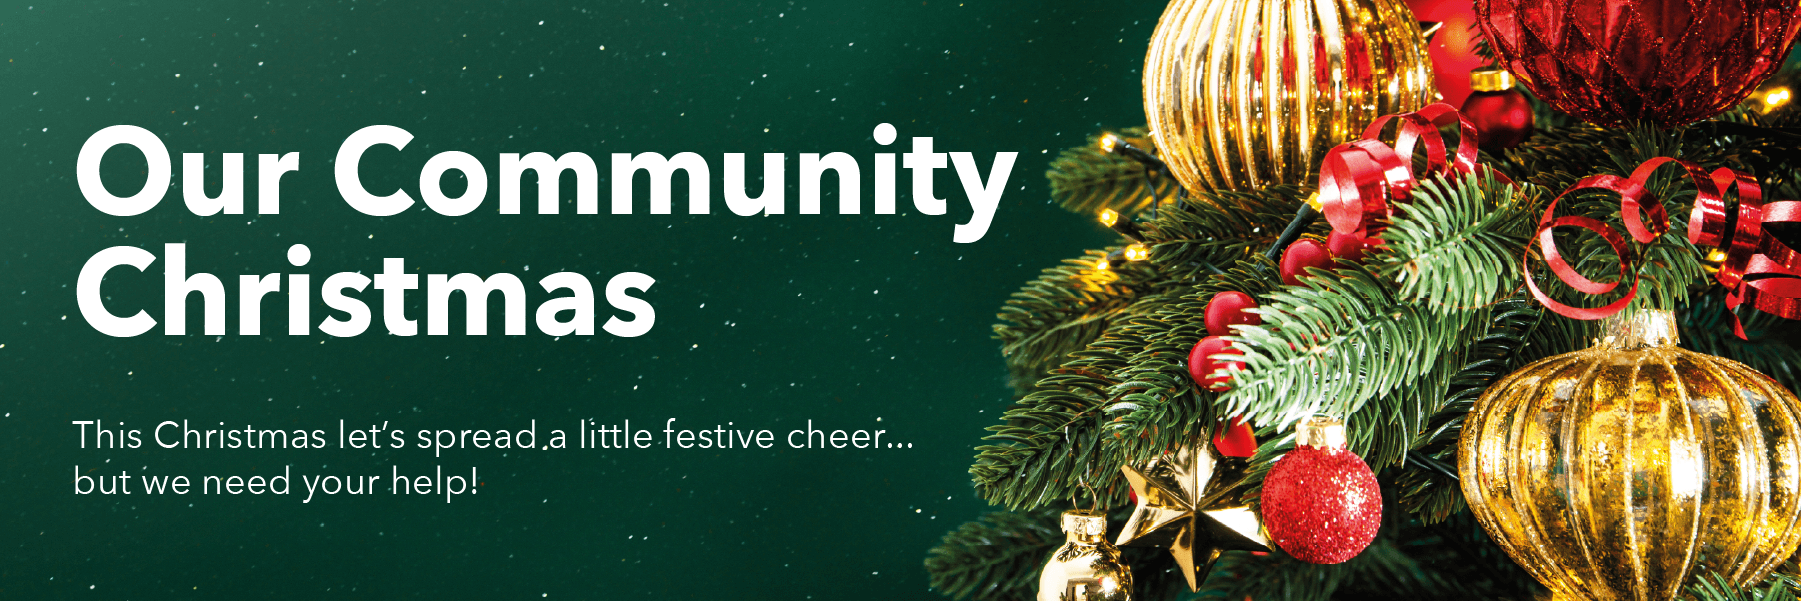 Celebrating A Community Christmas!